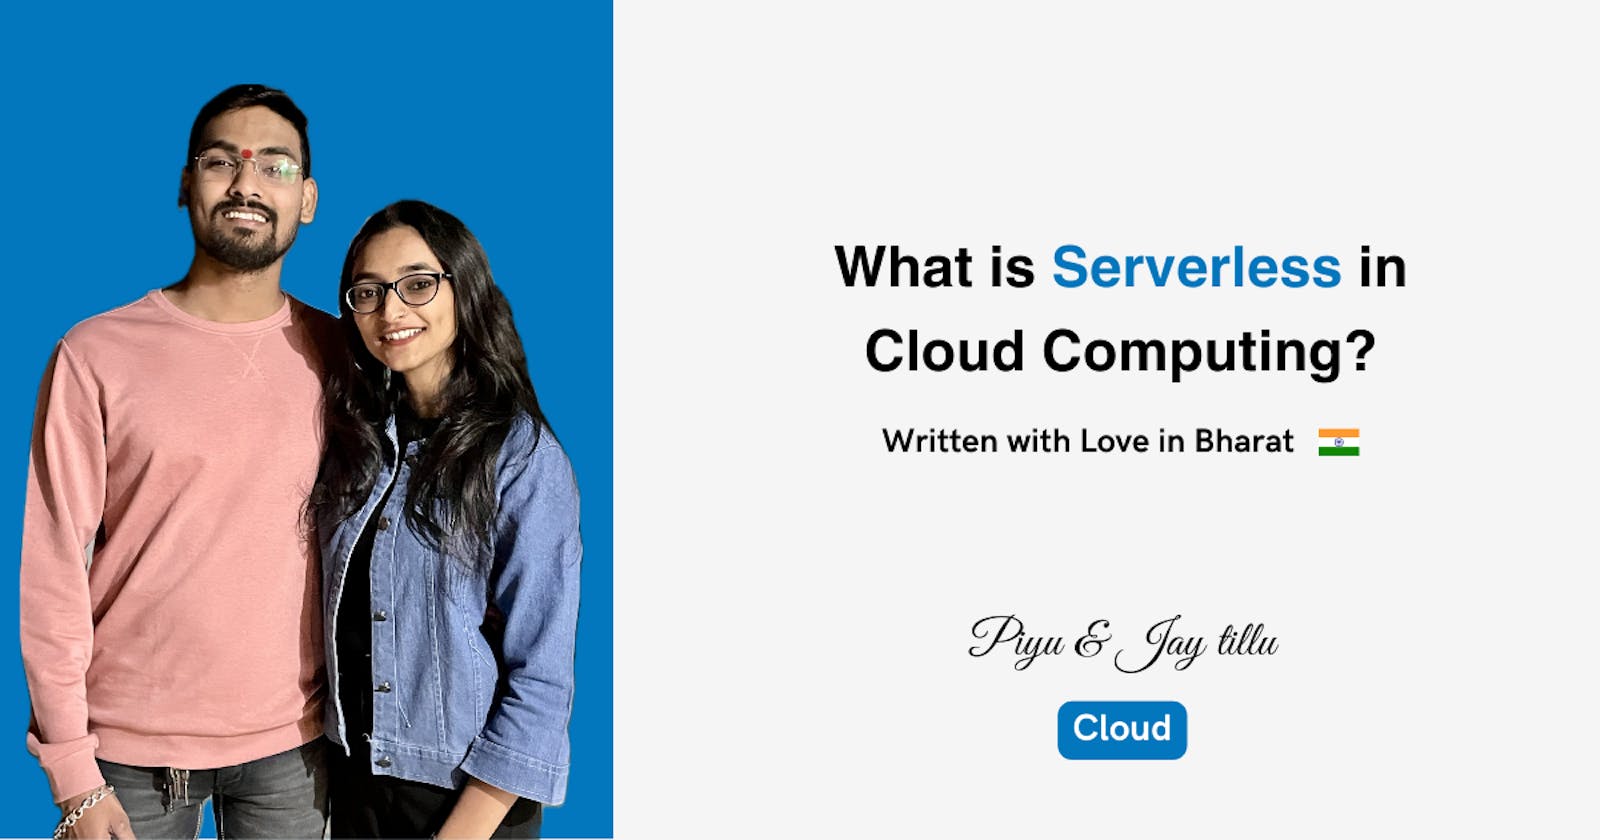 What is Serverless in Cloud Computing?